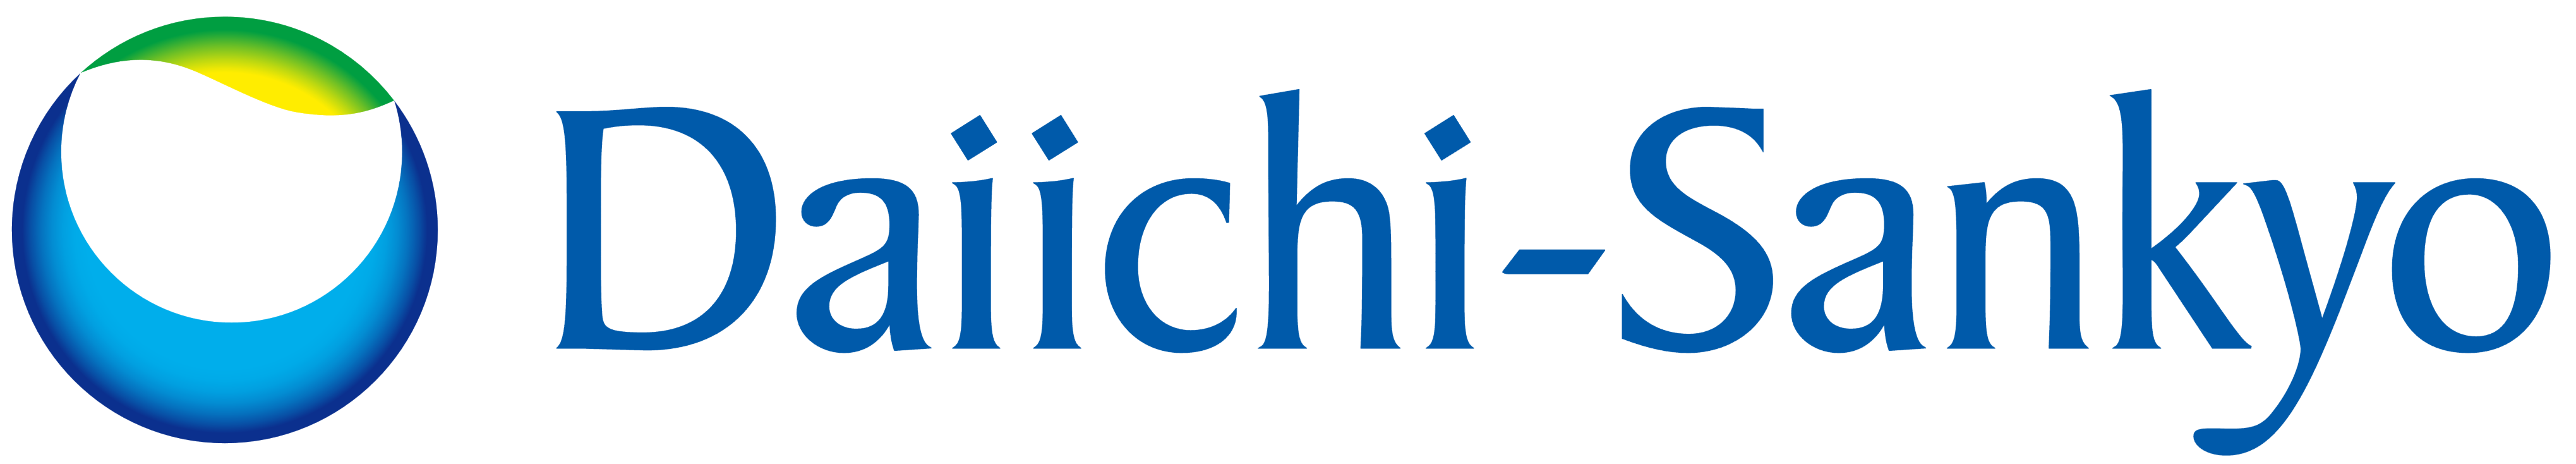 Daiichi Sankyo - Téléchargement des logos